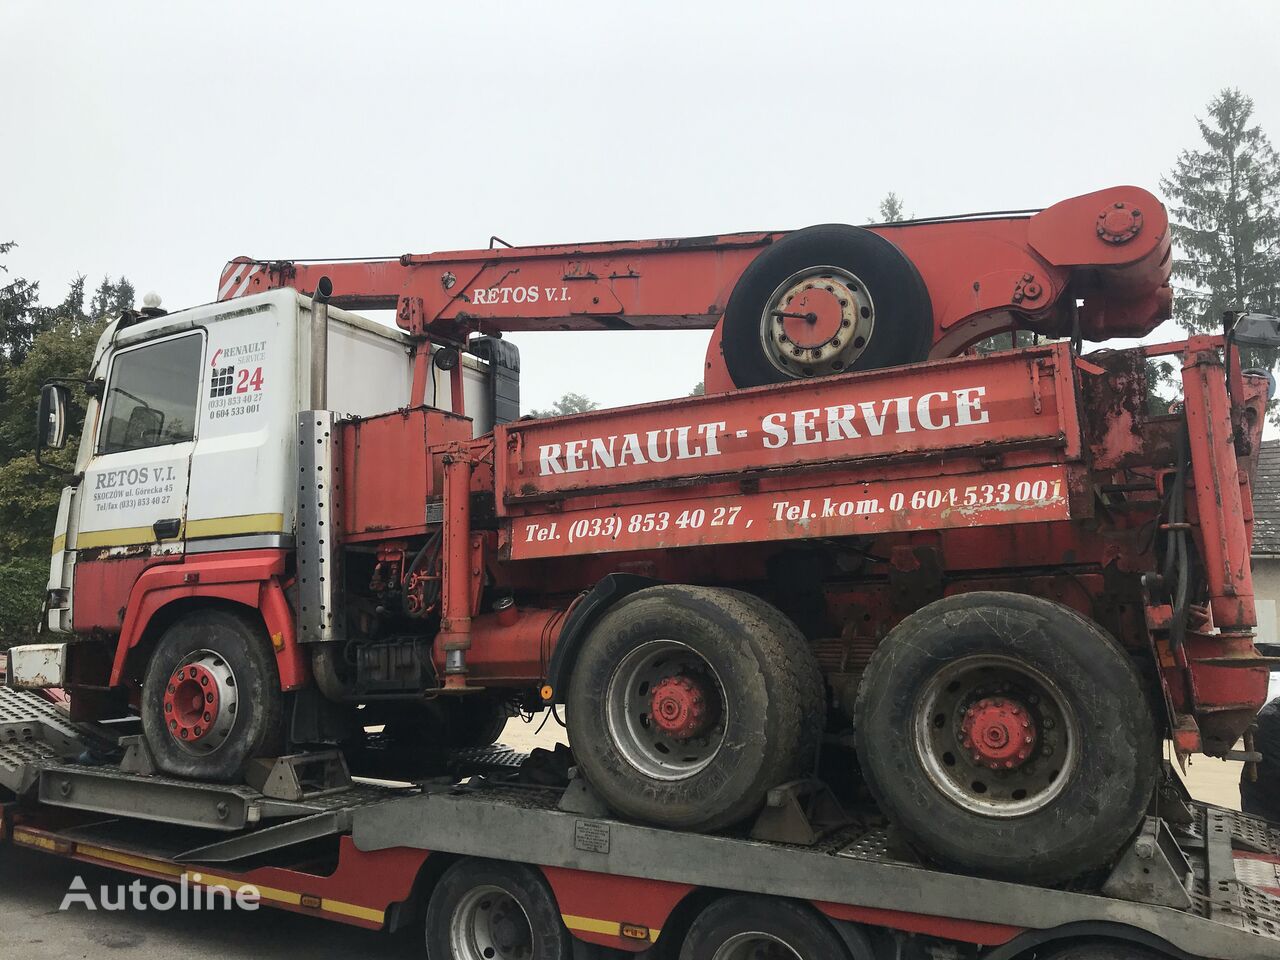 Renault Major Holownik Pomoc Drogowa Roadside assistance tow truck body